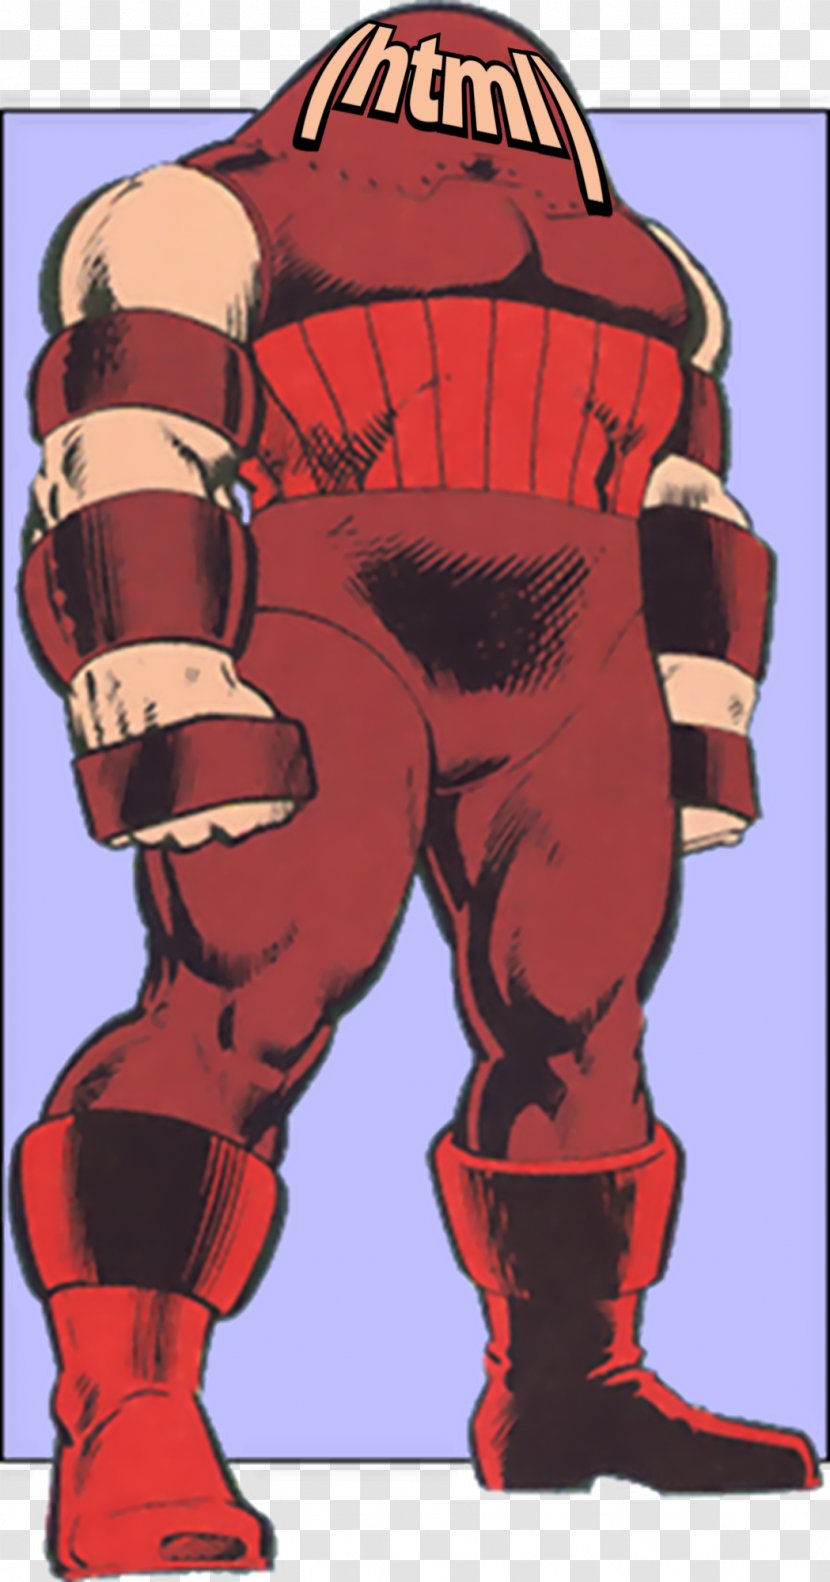 Juggernaut Professor X Storm Wolverine Colossus Transparent PNG